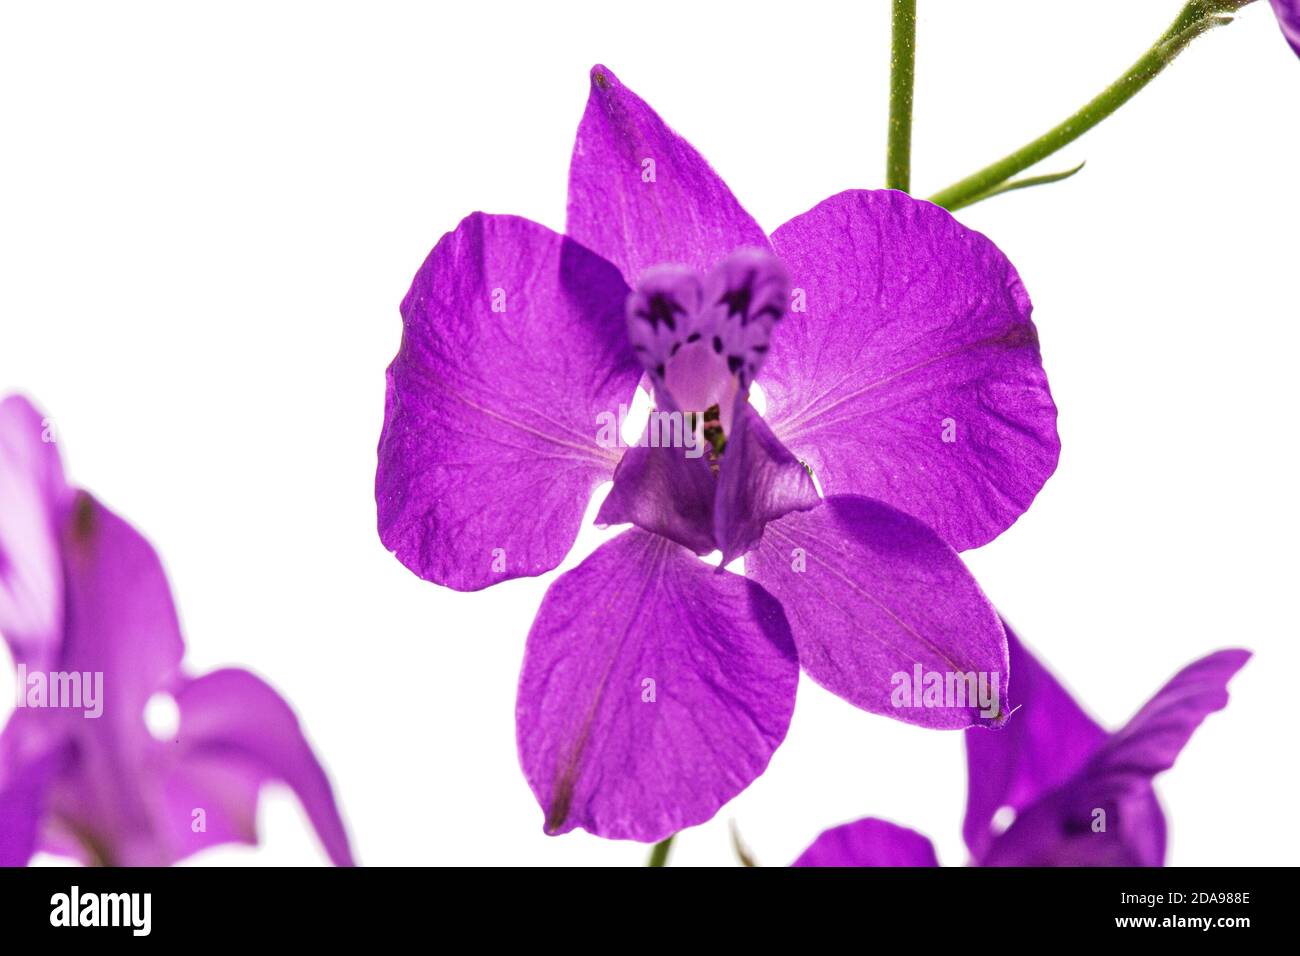 Violet flower of wild delphinium, larkspur flower, isolated on white background Stock Photo